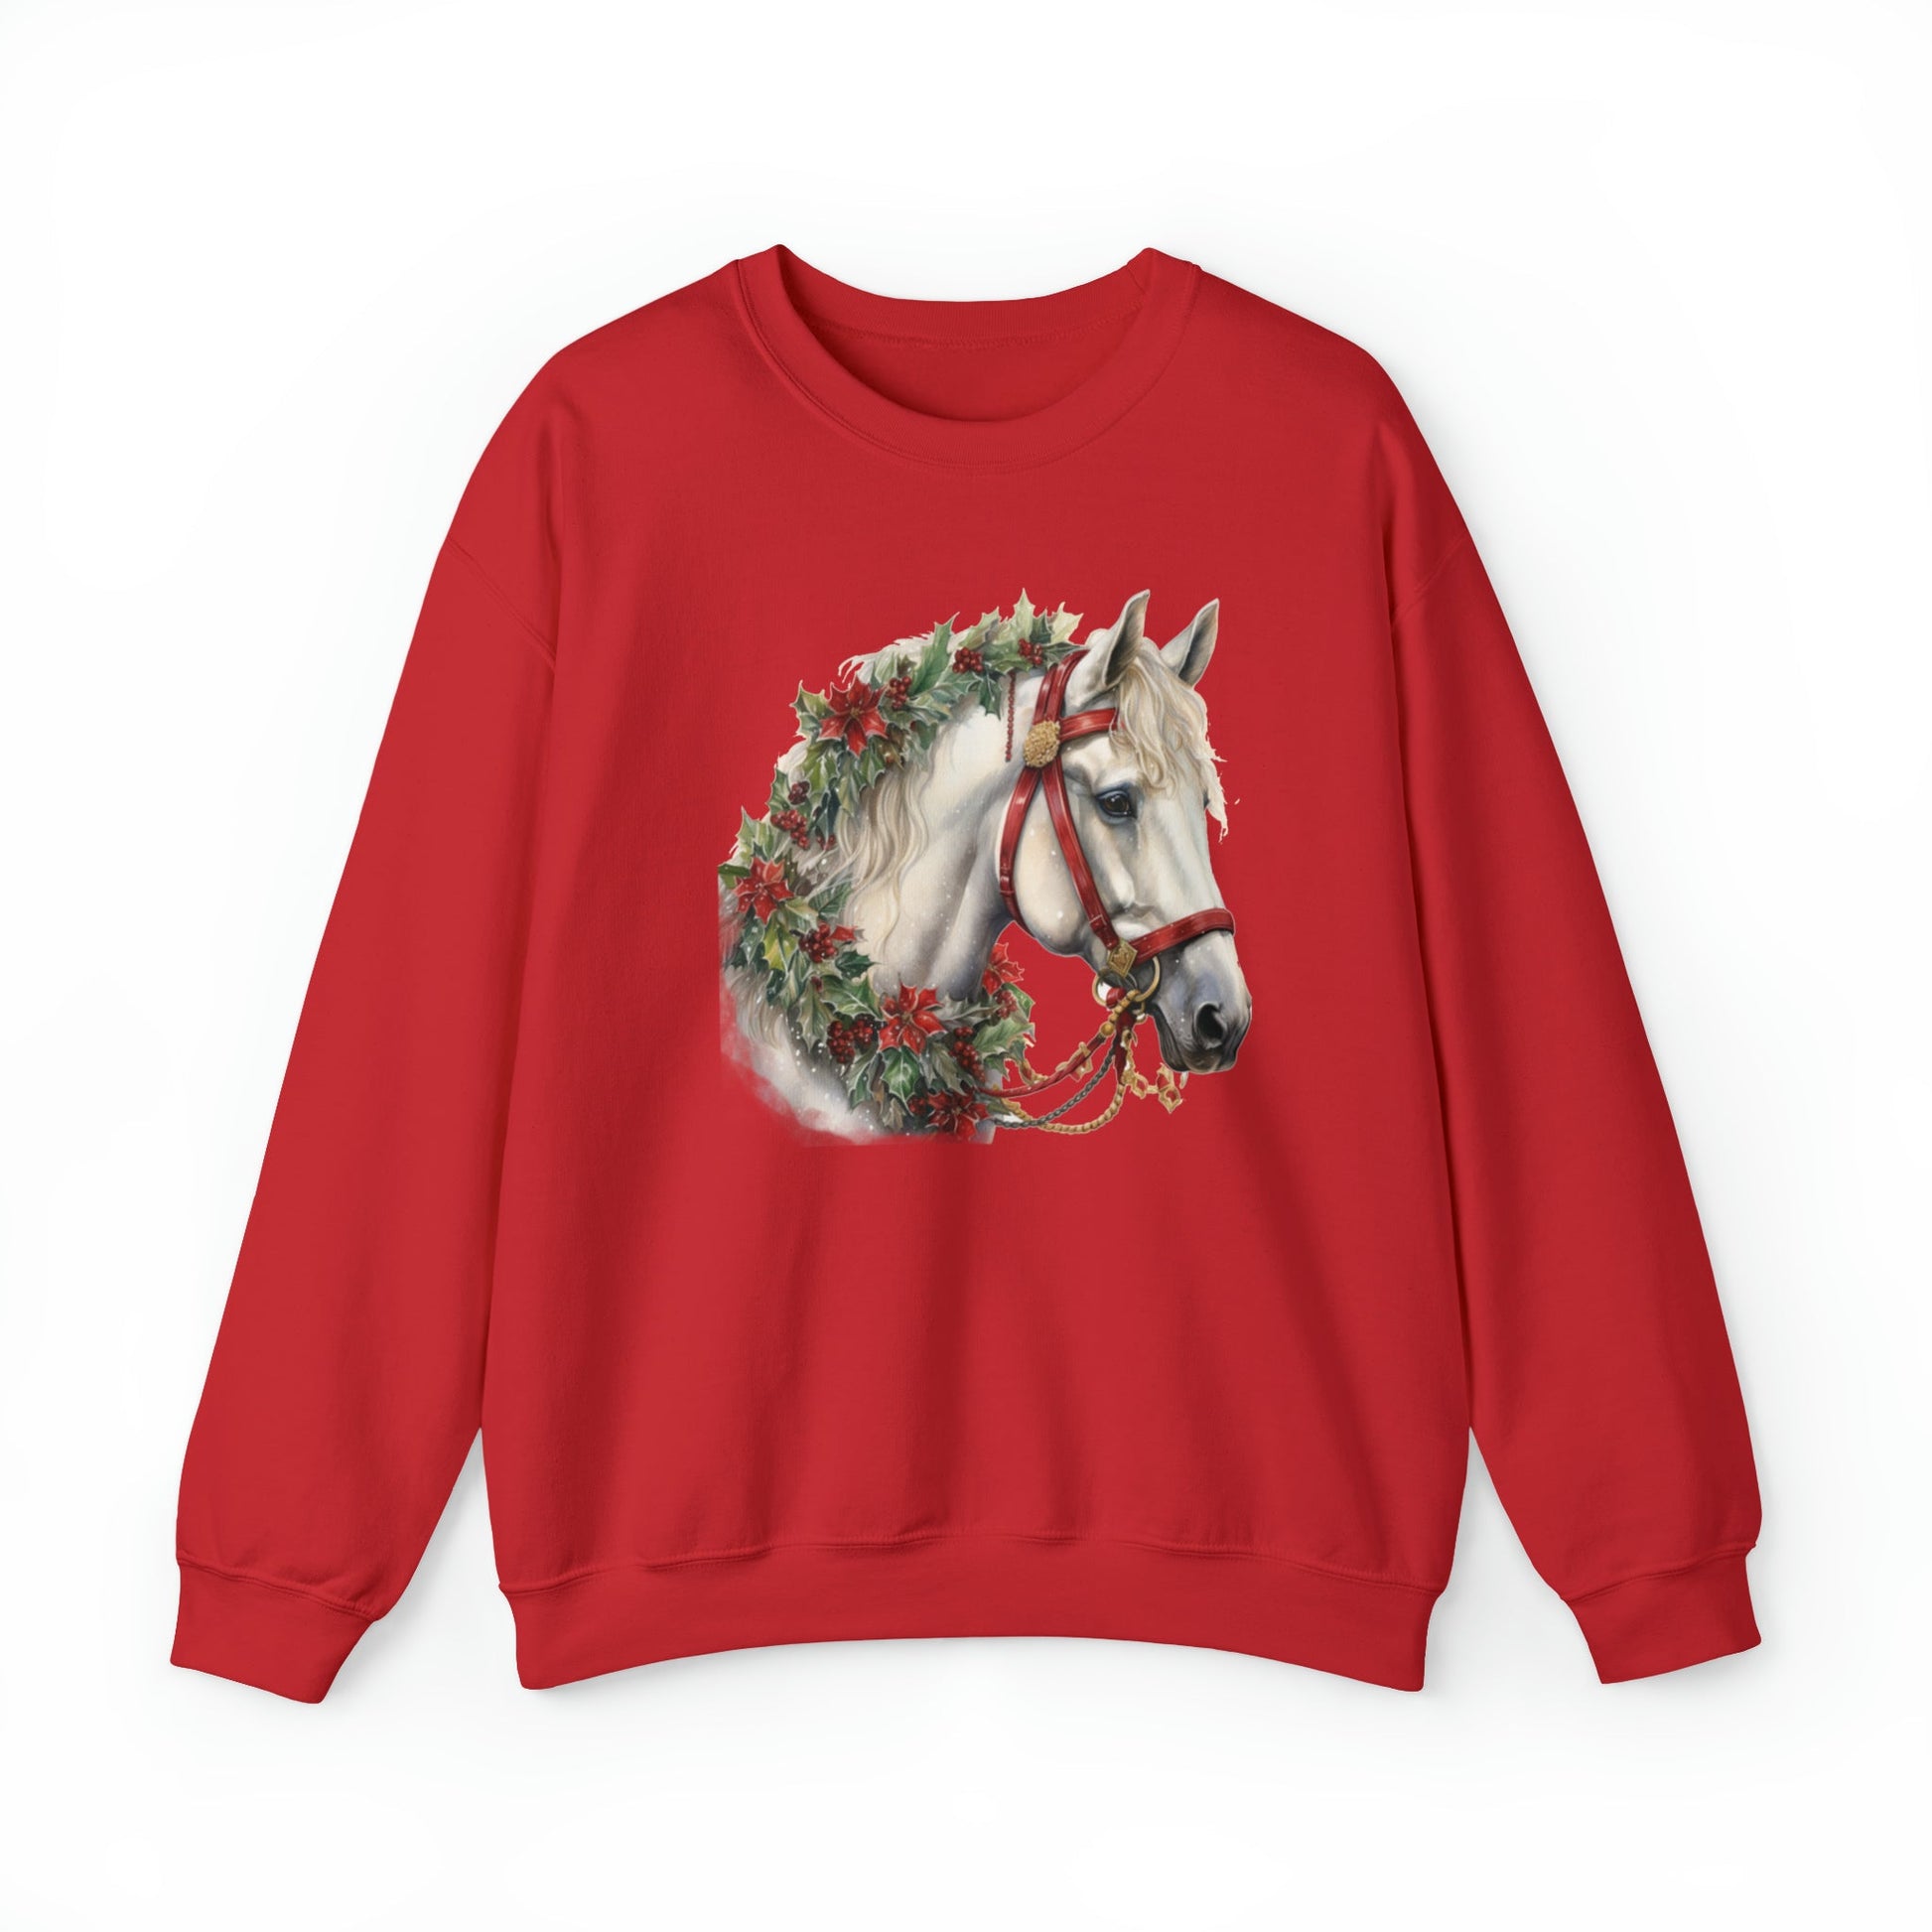 Horse Shirt, Holiday Christmas Shirt, Horse Lover Sweatshirt - FlooredByArt